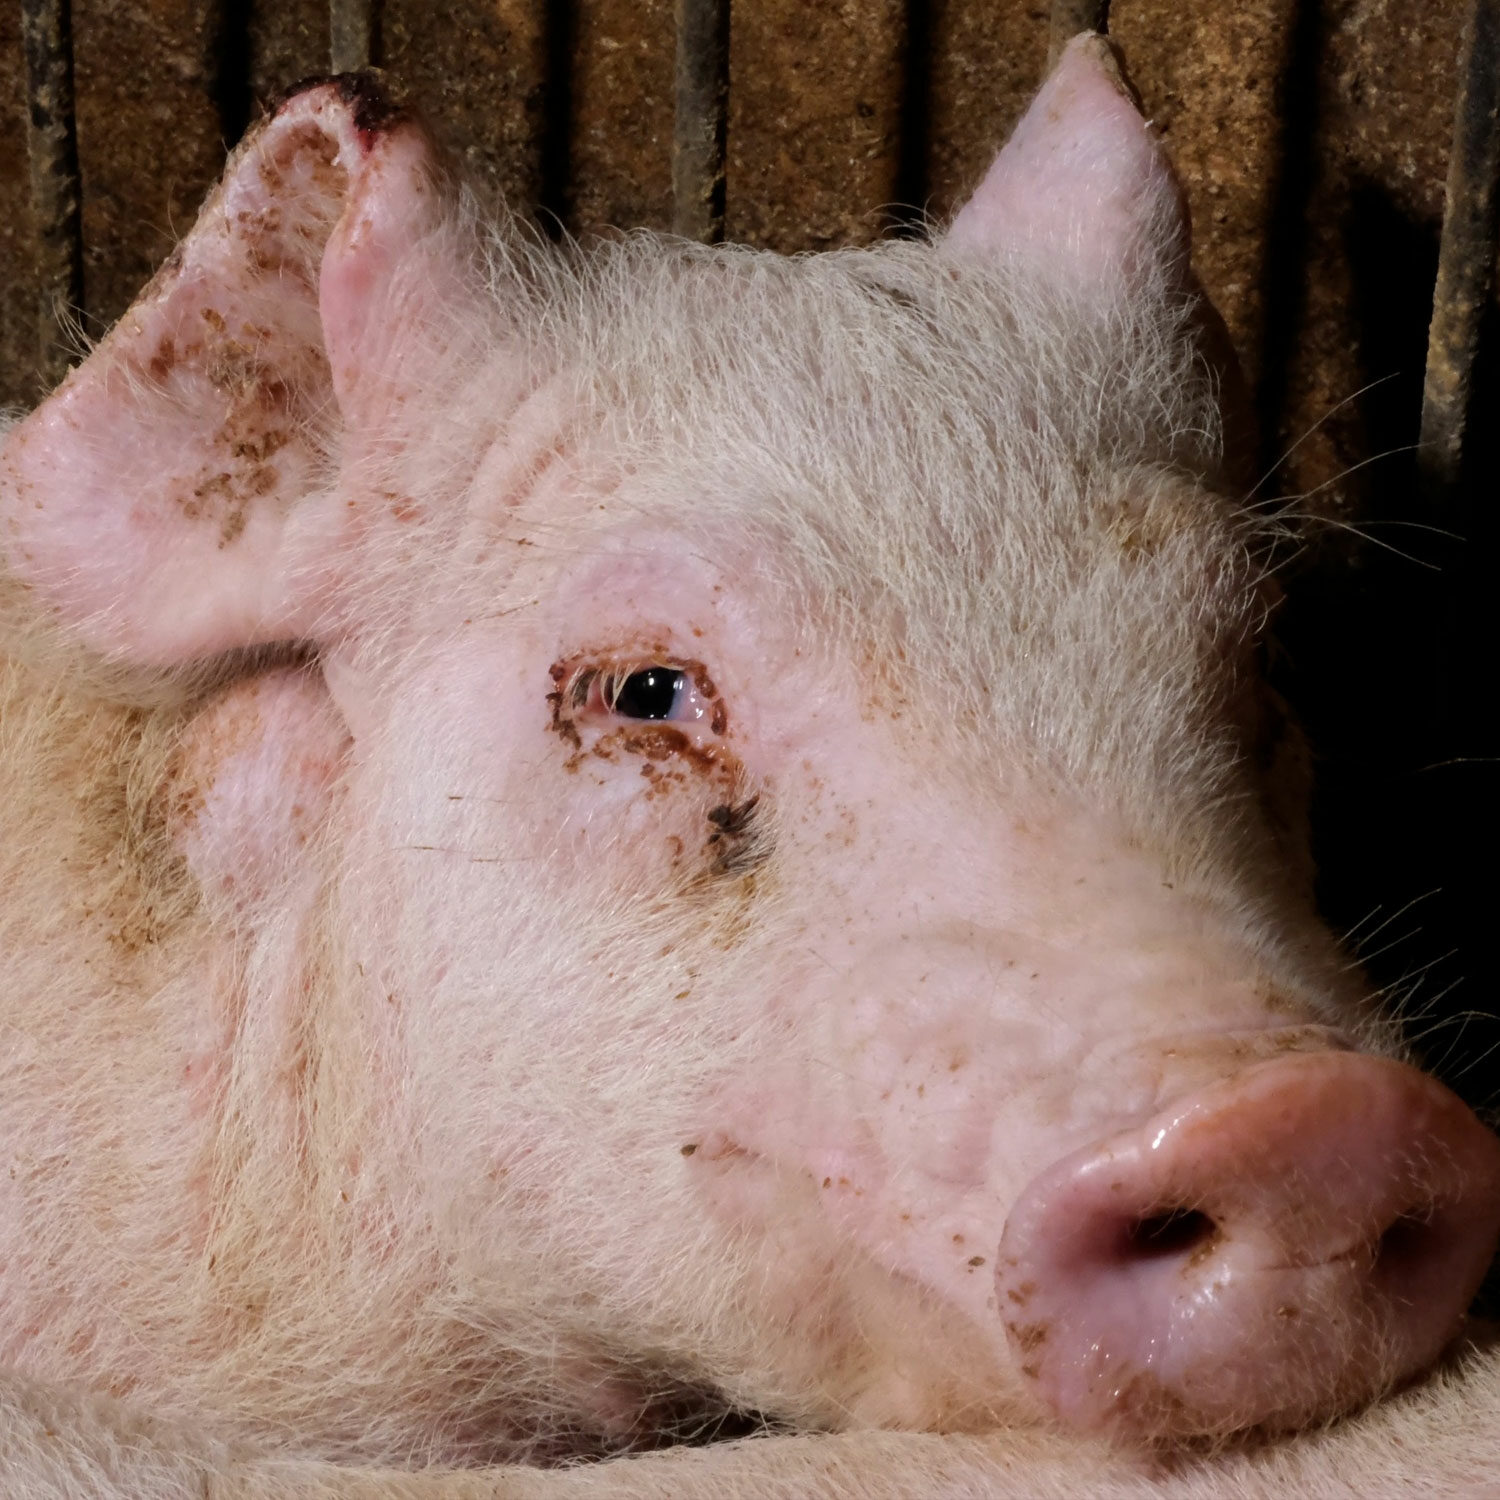 scared pig in Italian slaughterhouse